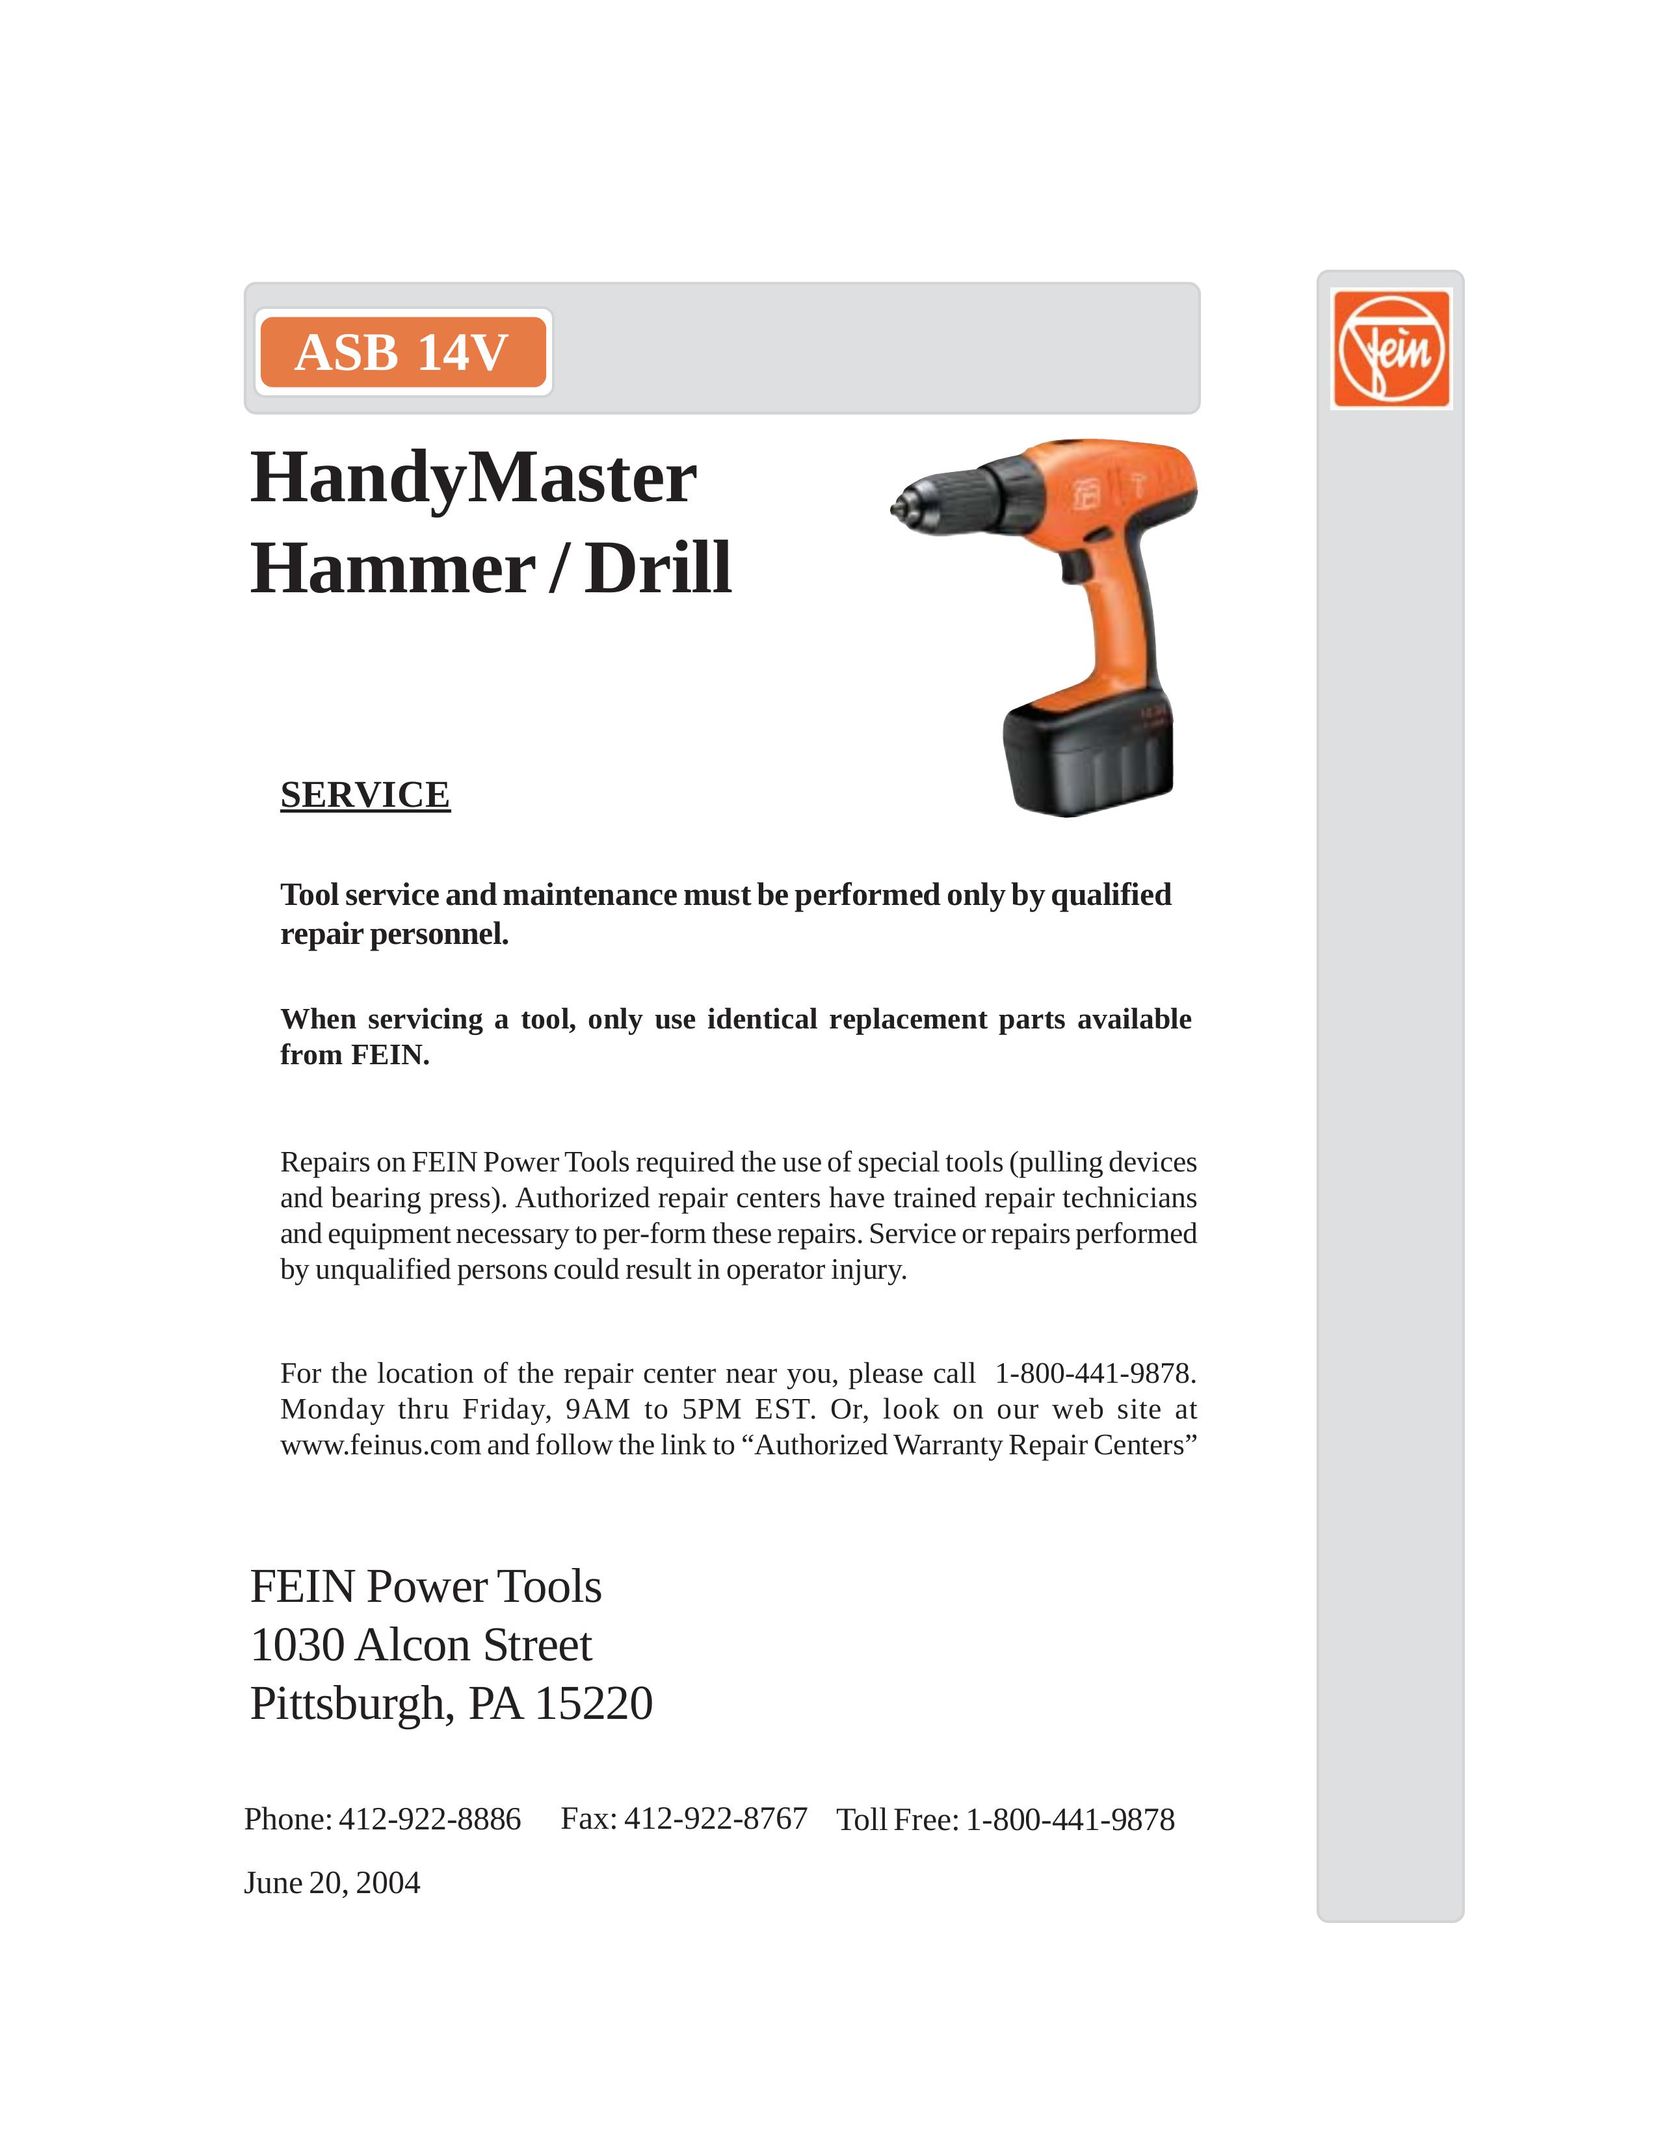 FEIN Power Tools ASB 14V Cordless Drill User Manual